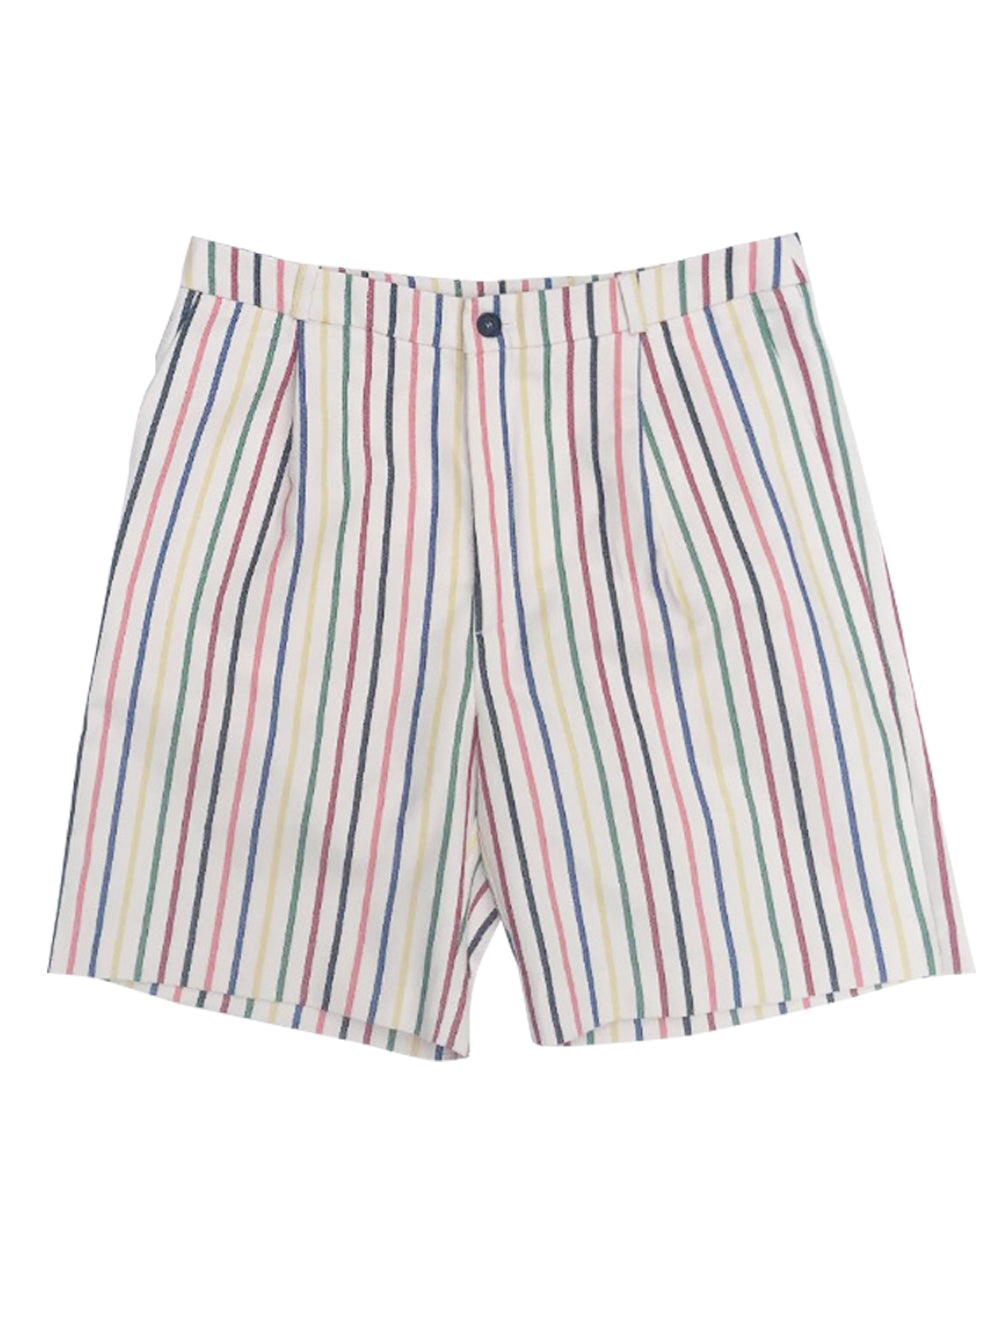 Bopak Striped Bermuda Shorts